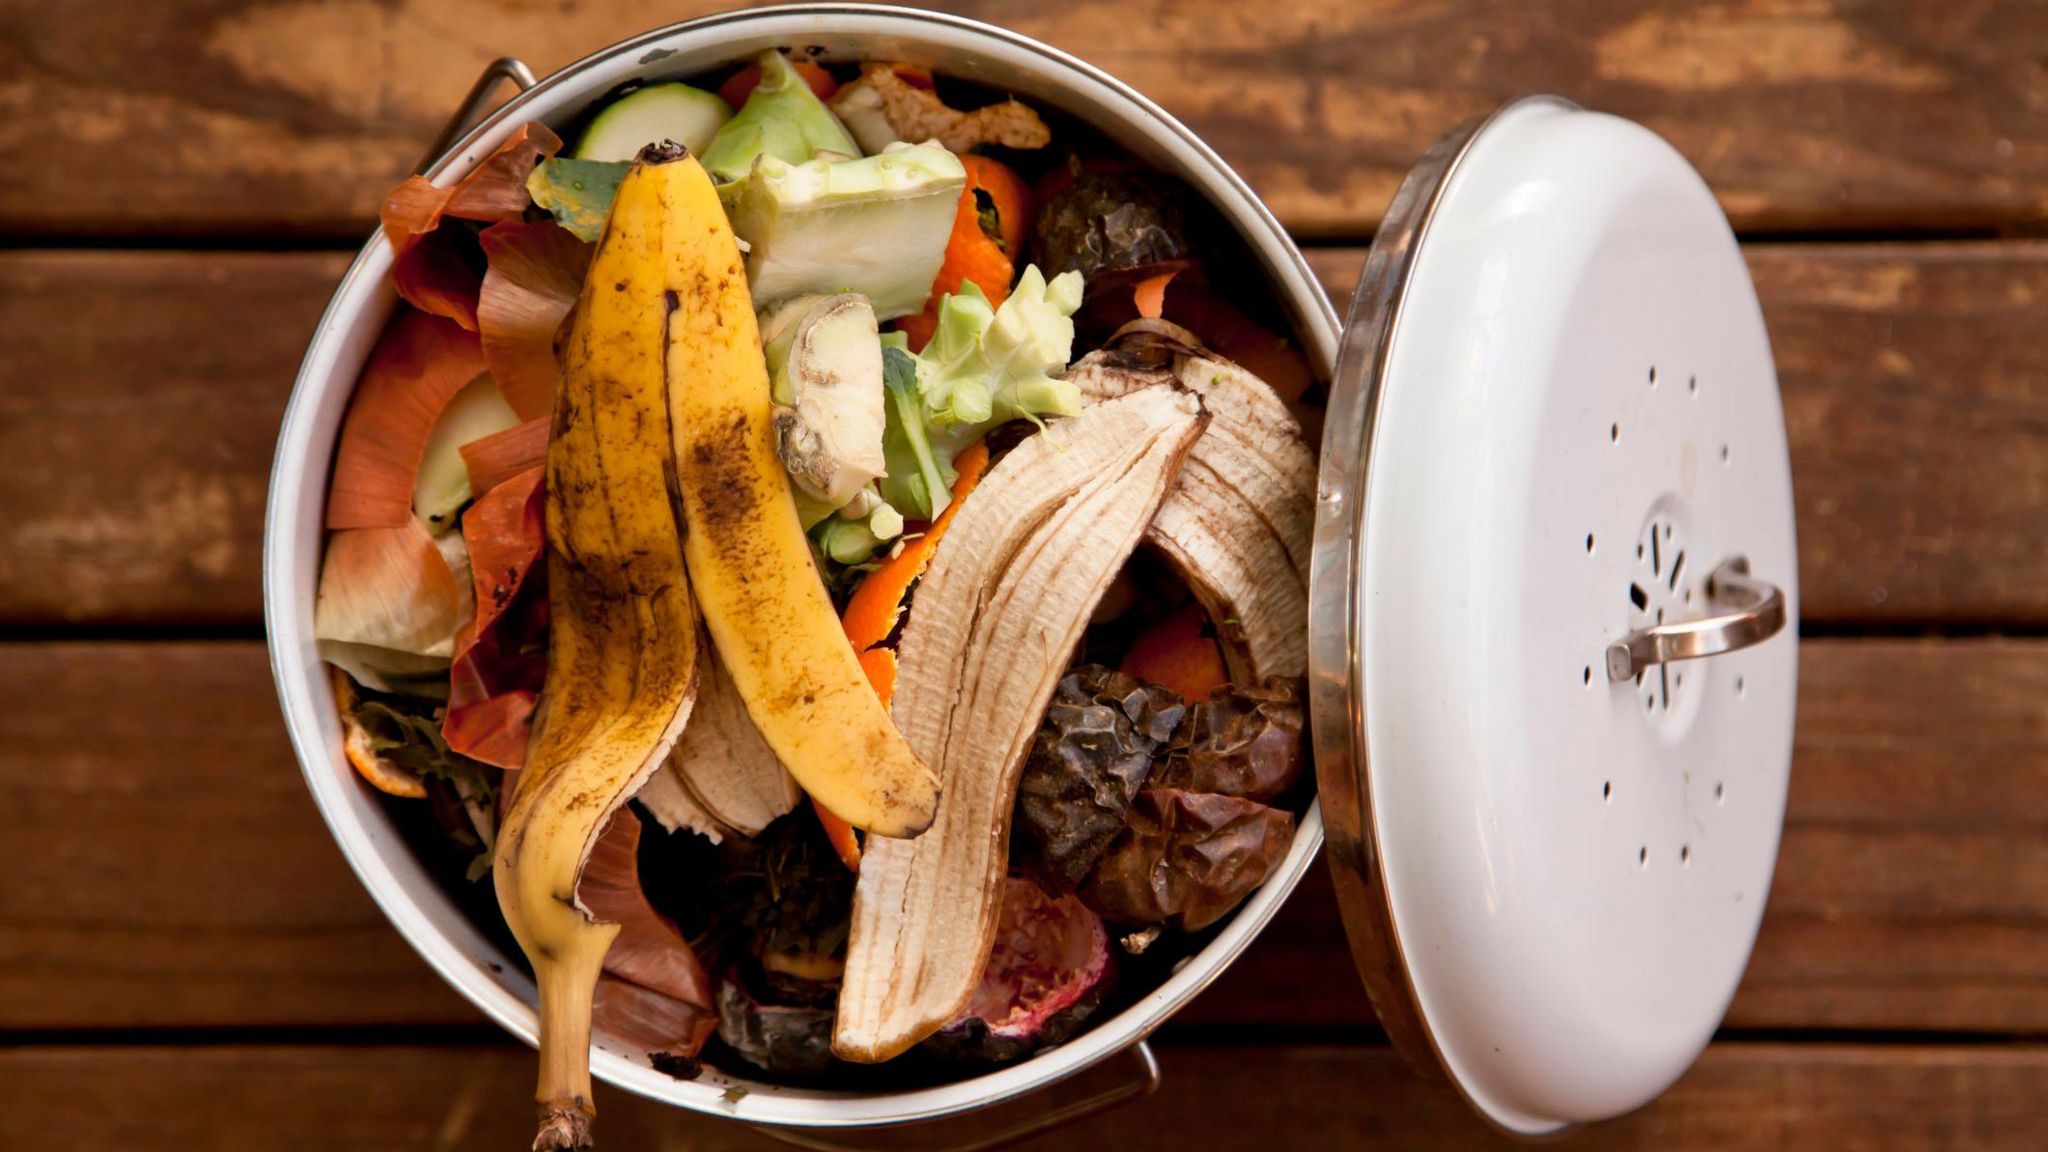 A food waste bin, including banana peels and onion peelings 